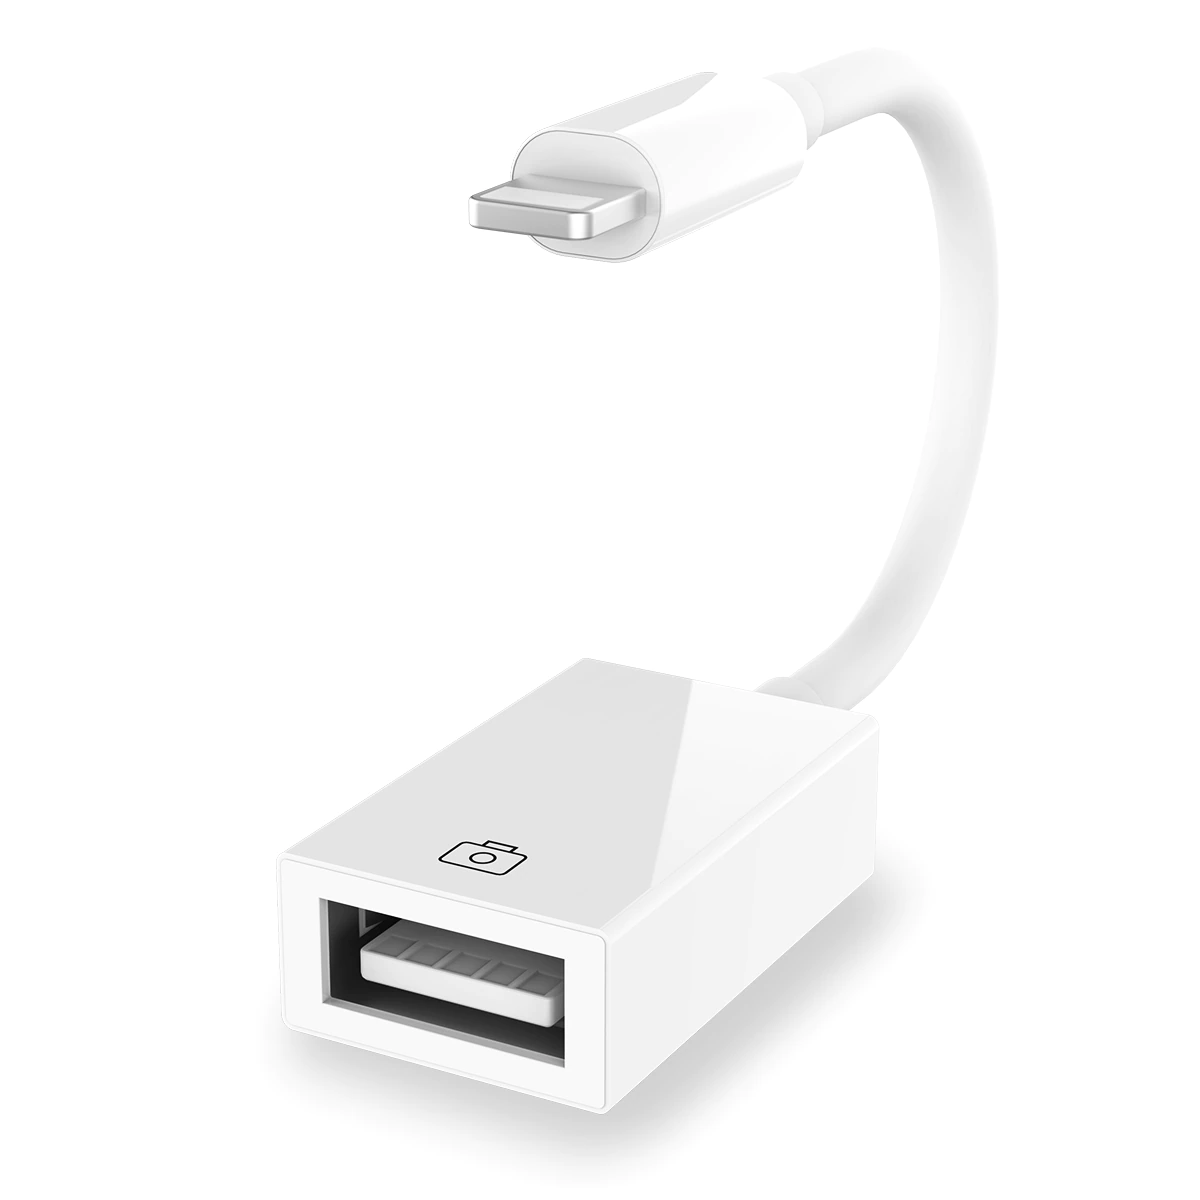 Adaptador OTG Lightning para USB iPhone iPad